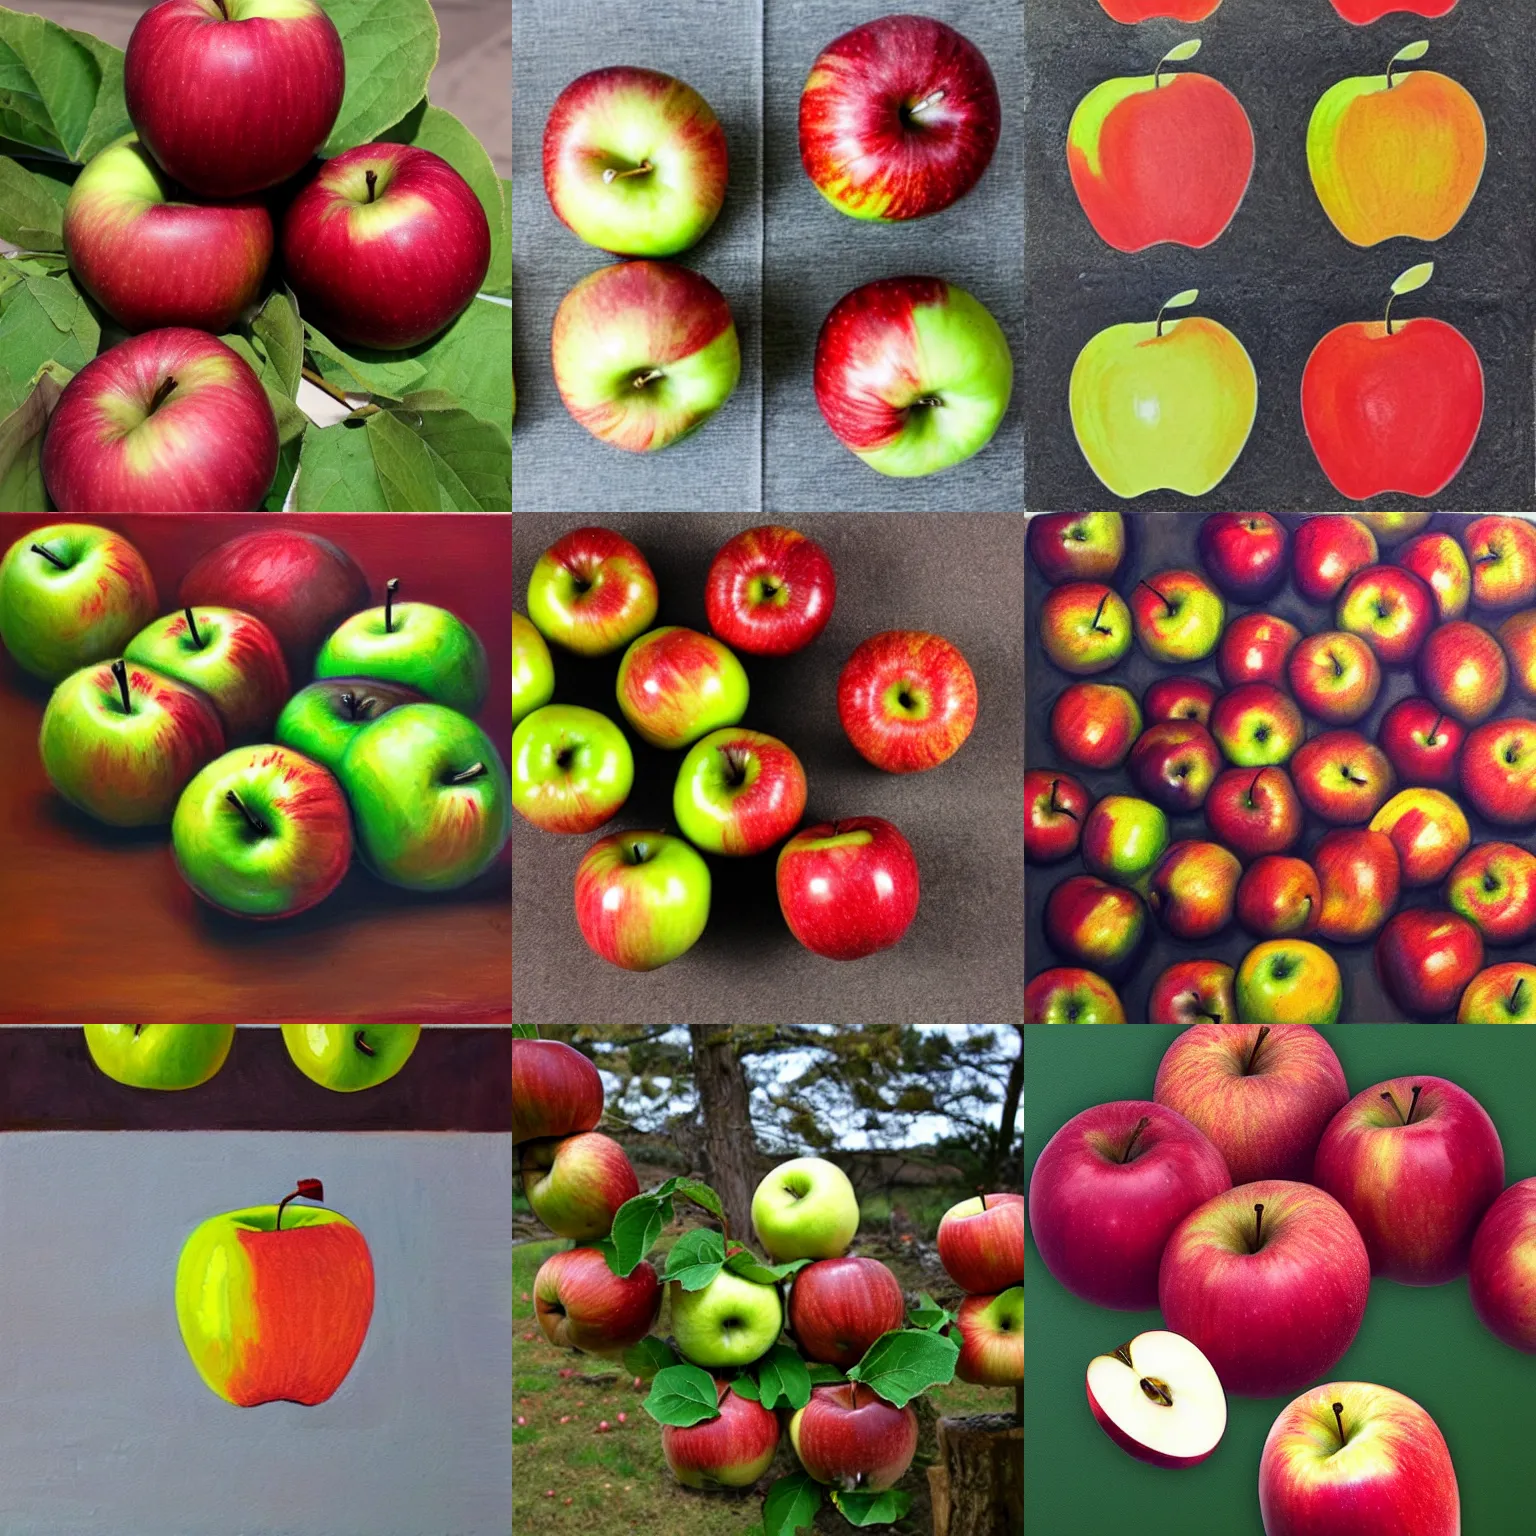 Prompt: 4. 5 apples